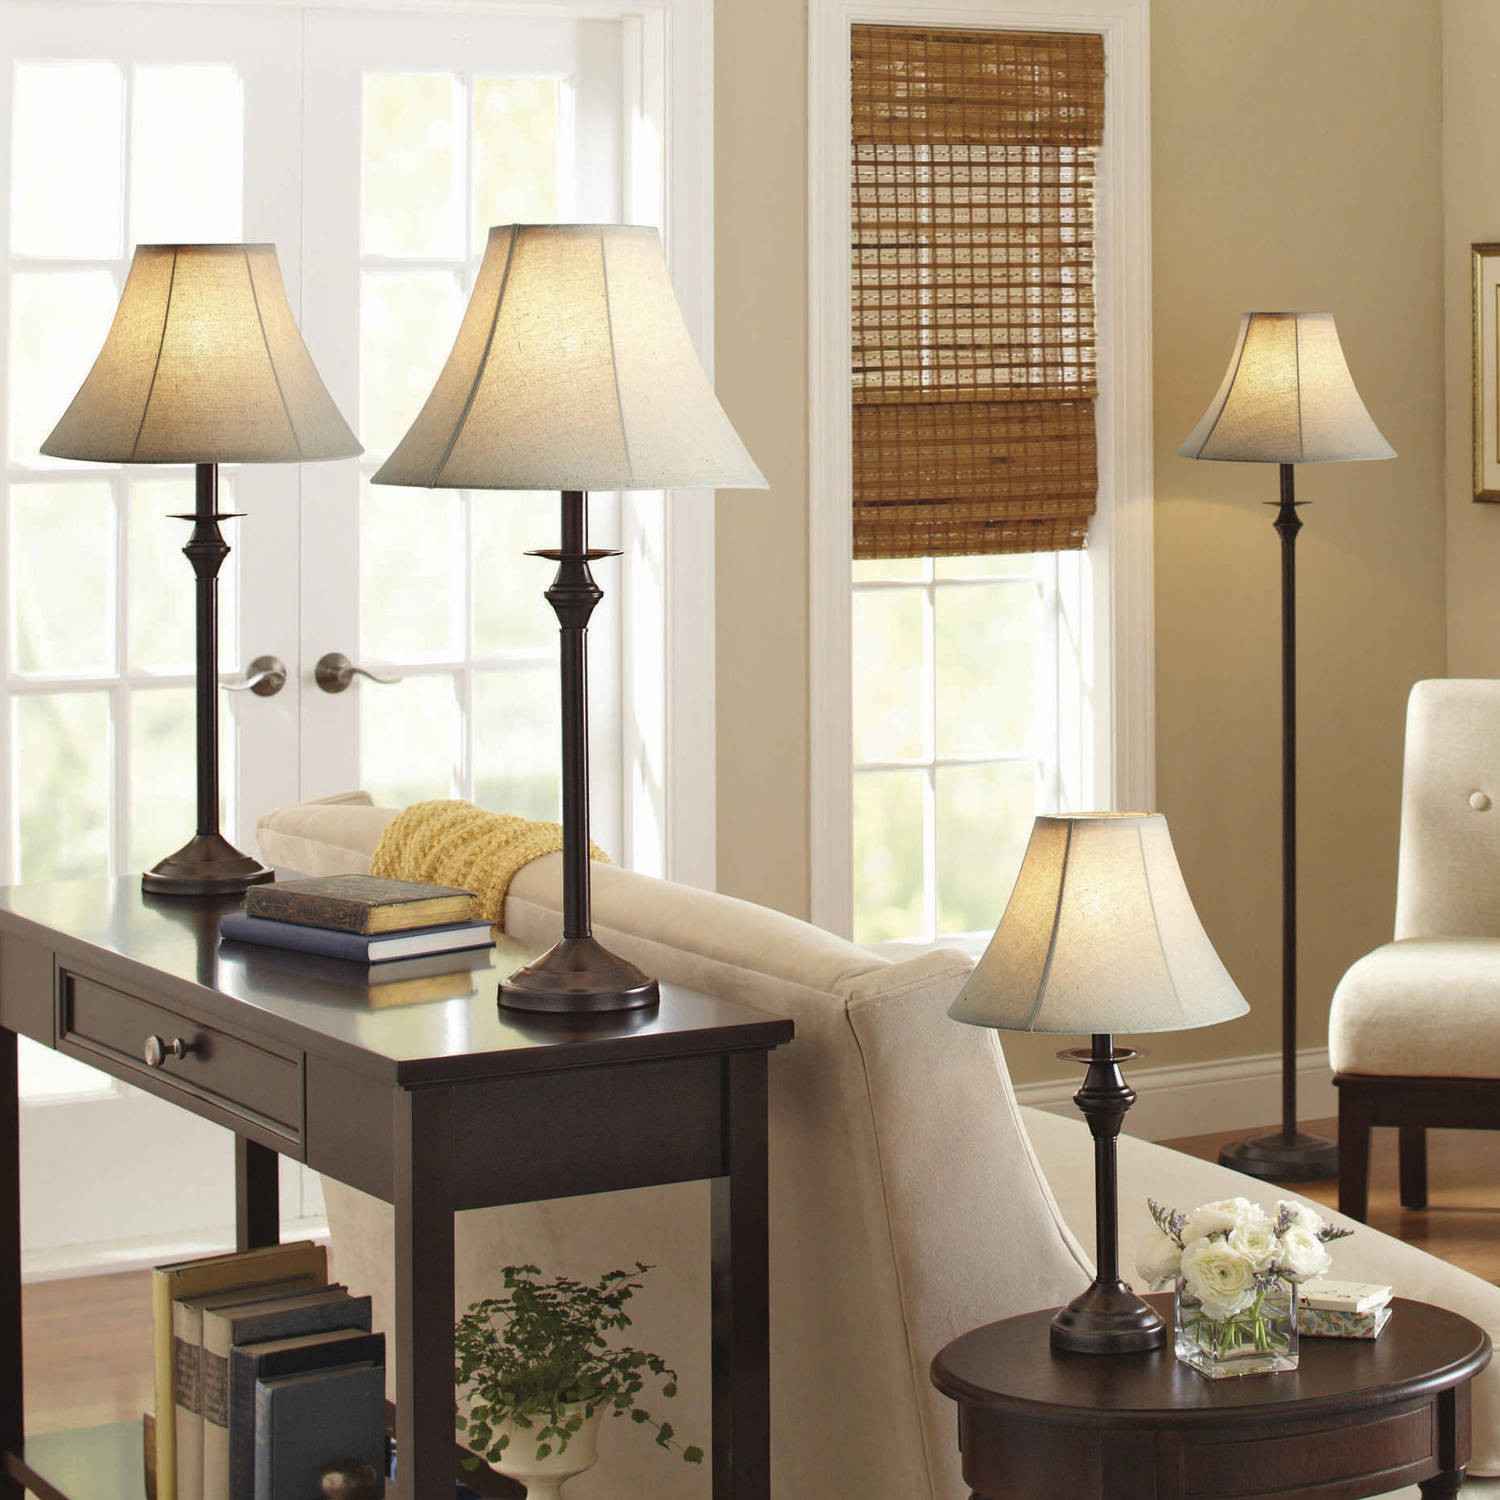 Floor Lamp In Living Room
 Living Room 4 Piece Lamp Set Floor Table Accent Lamps